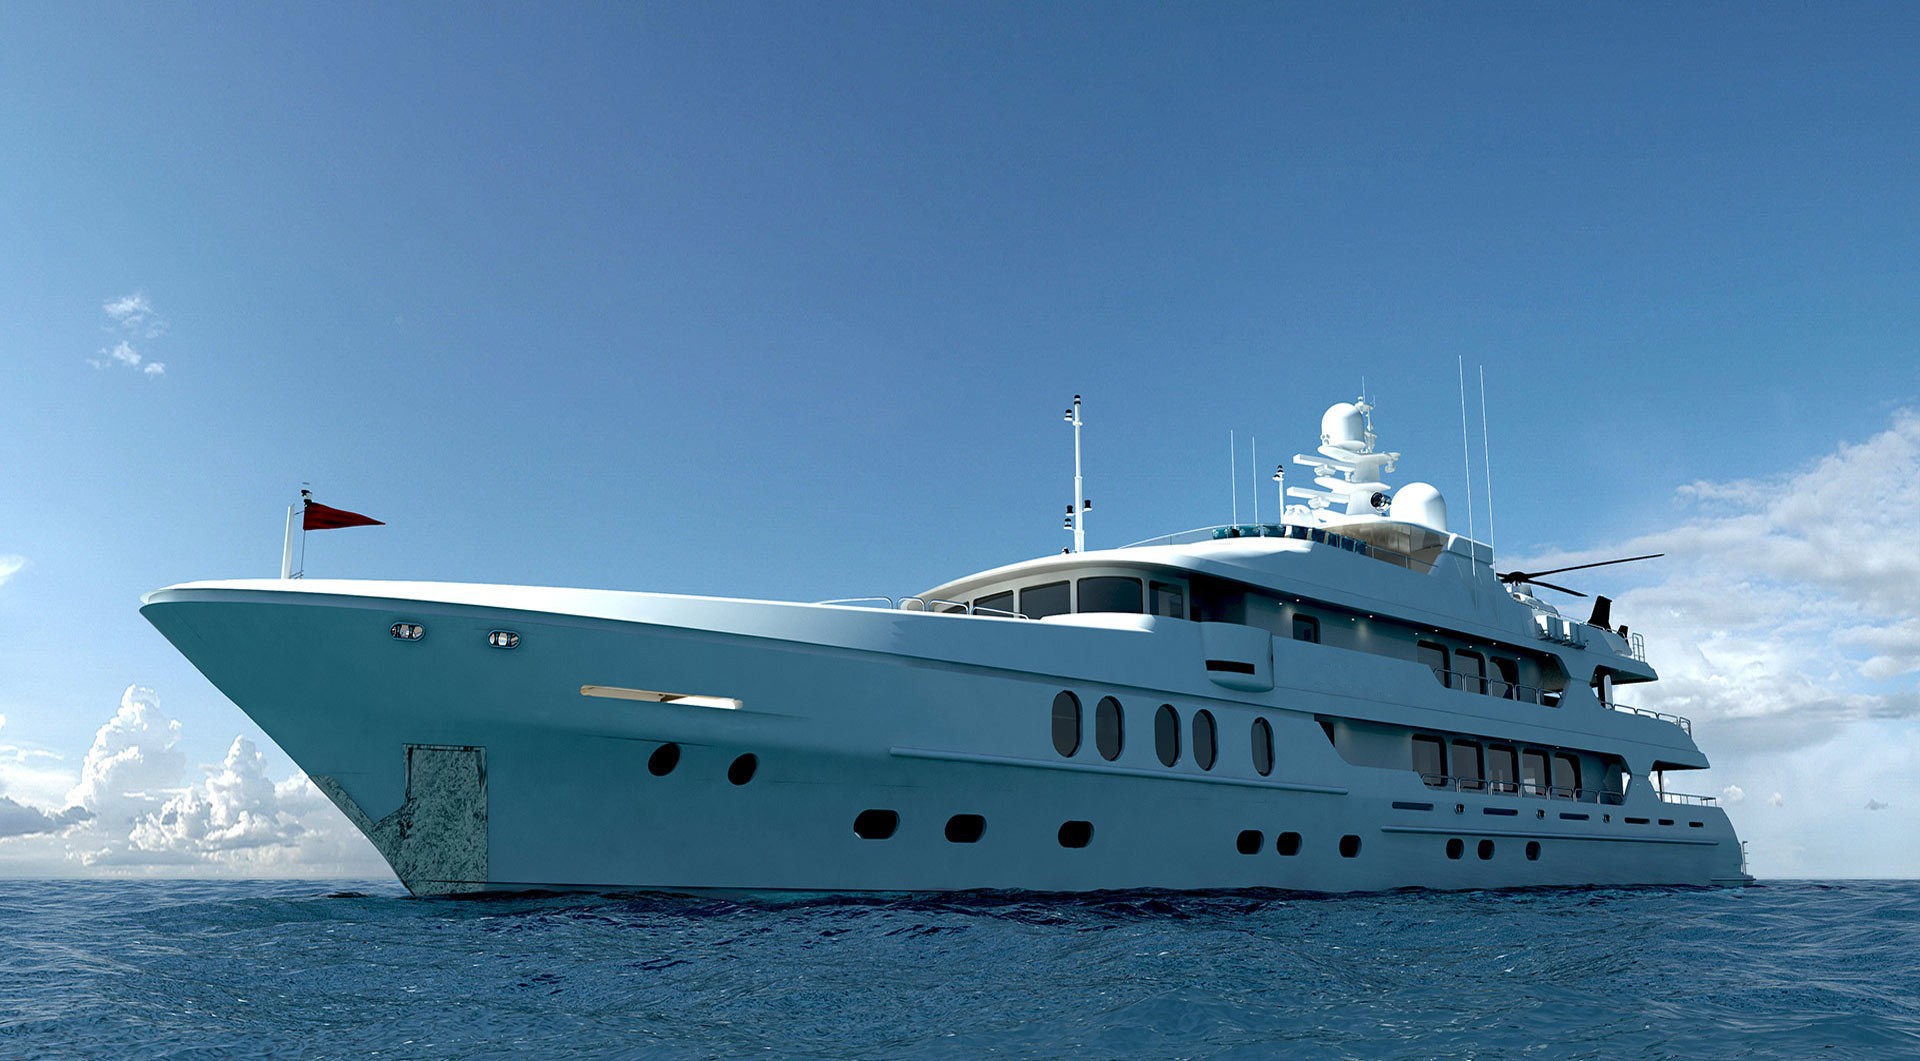 49m Luxury Motor Yacht Profile